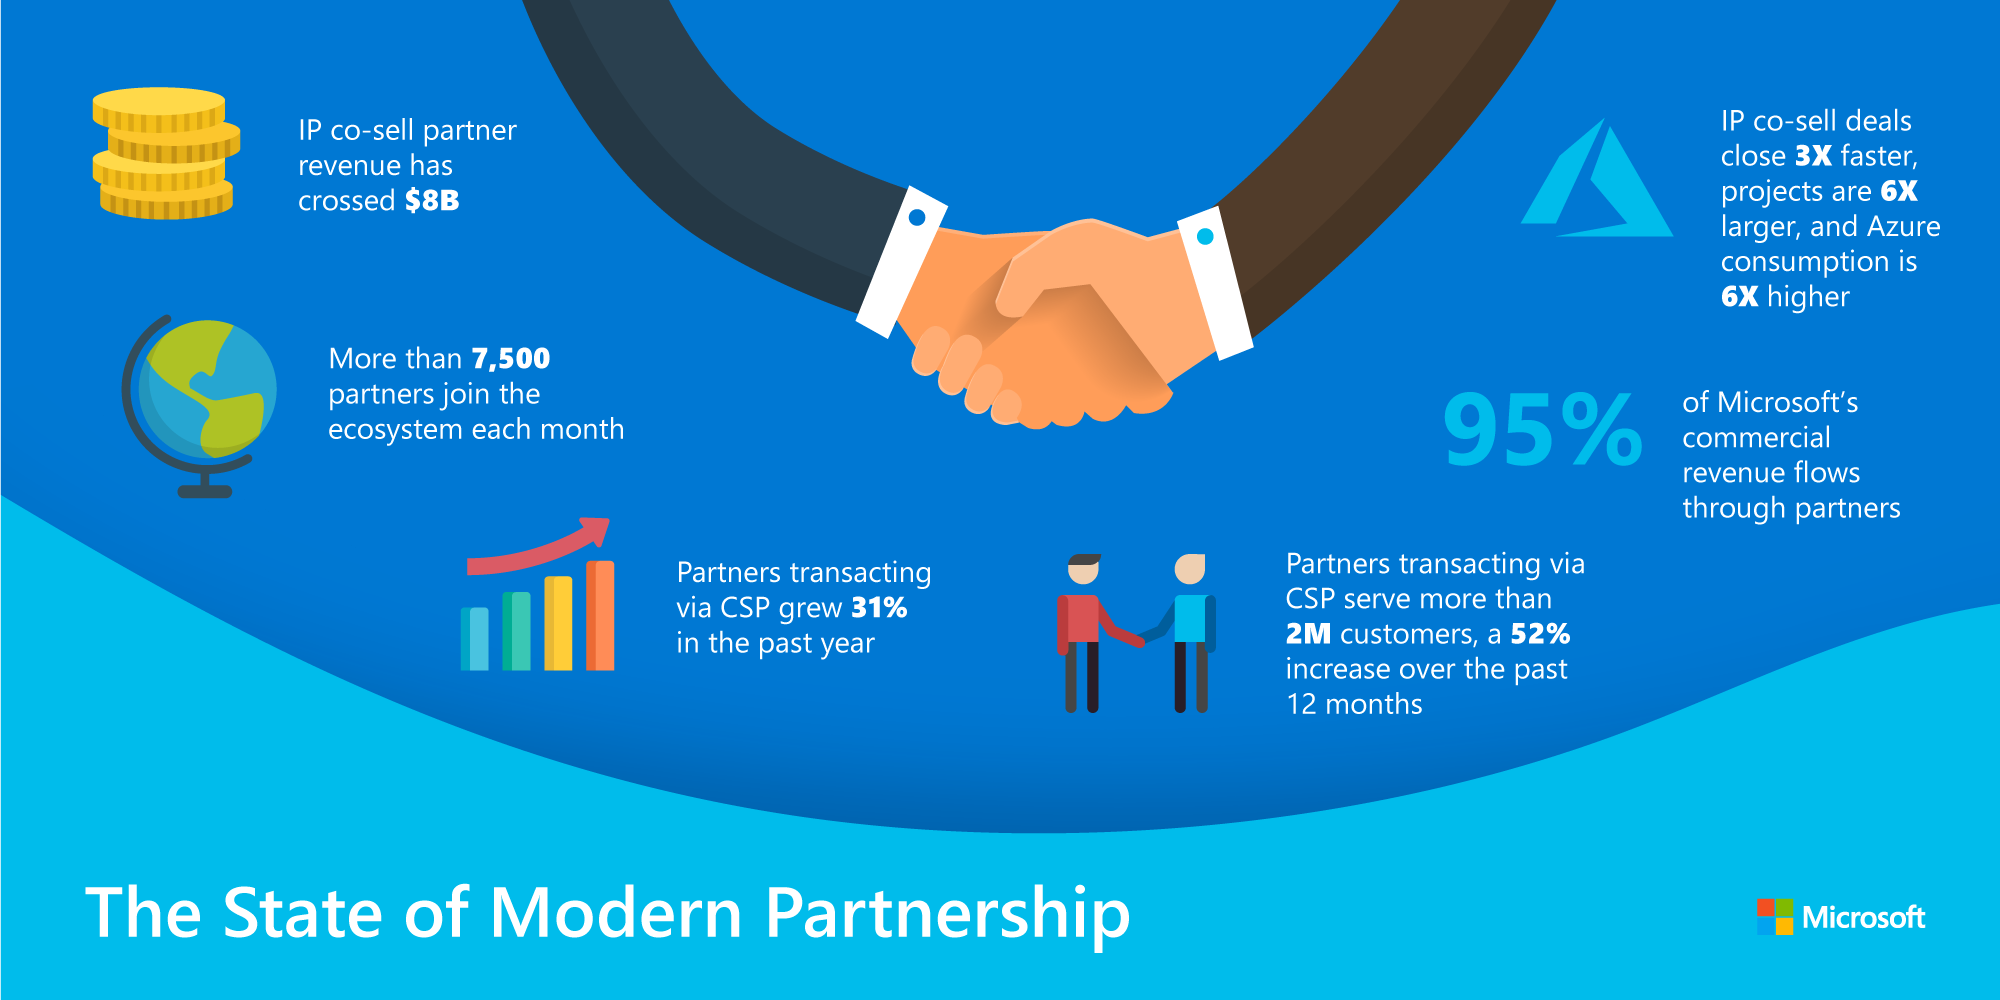 Blue infographic detailing partner statistics